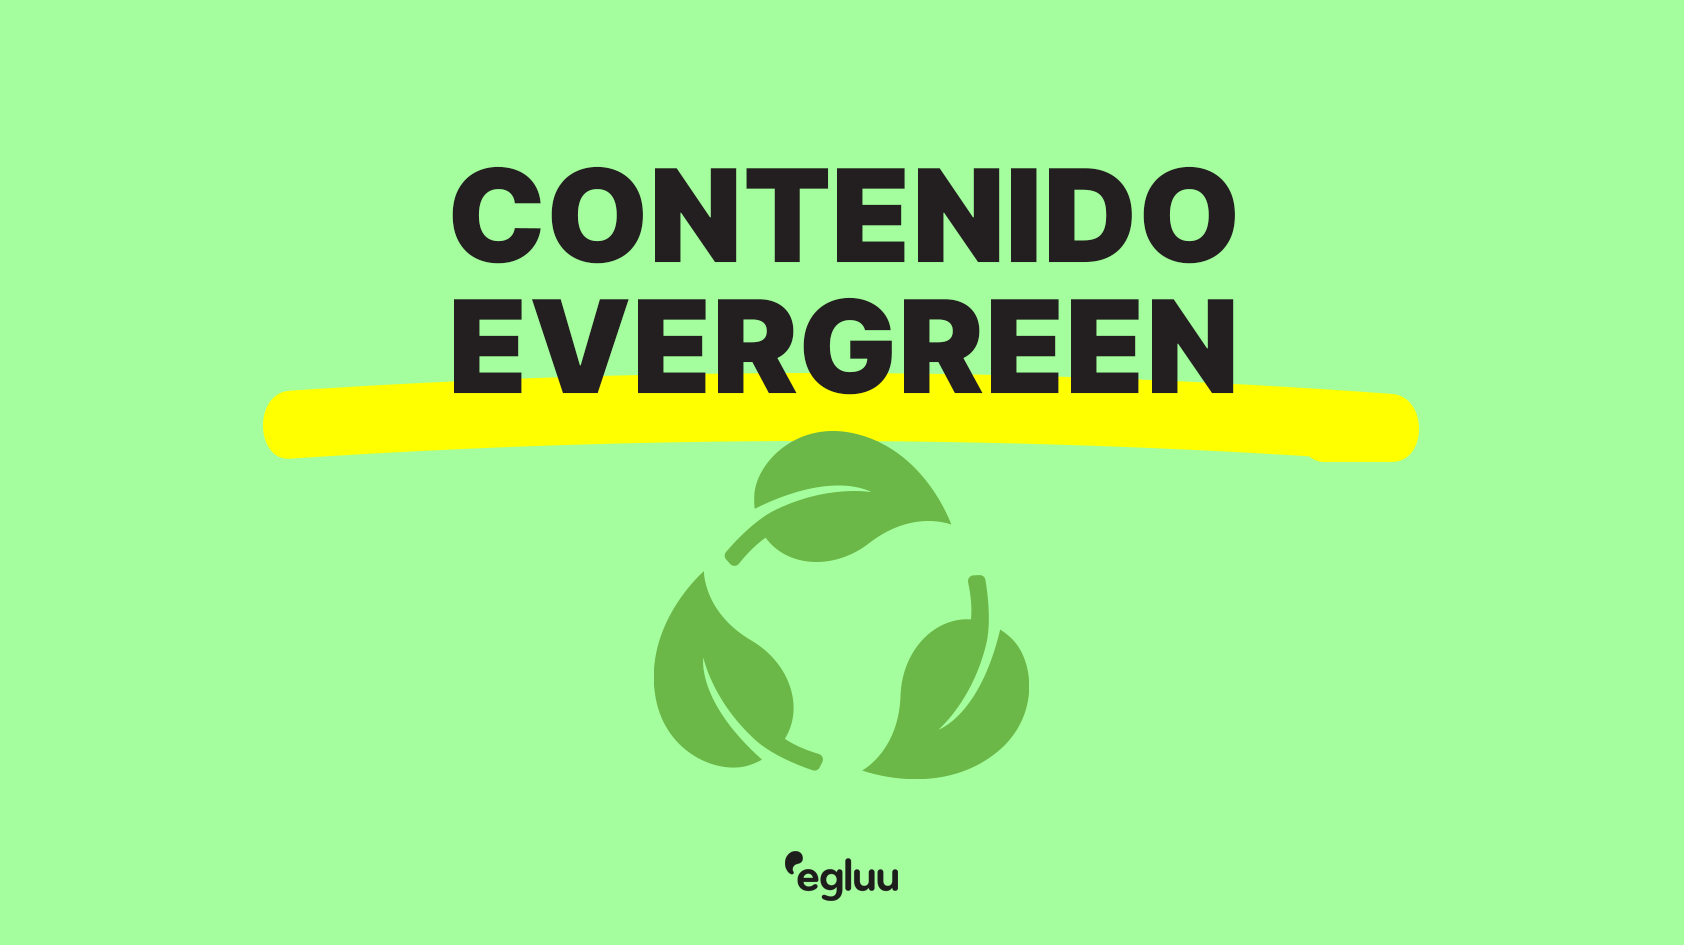 contenido evergreen